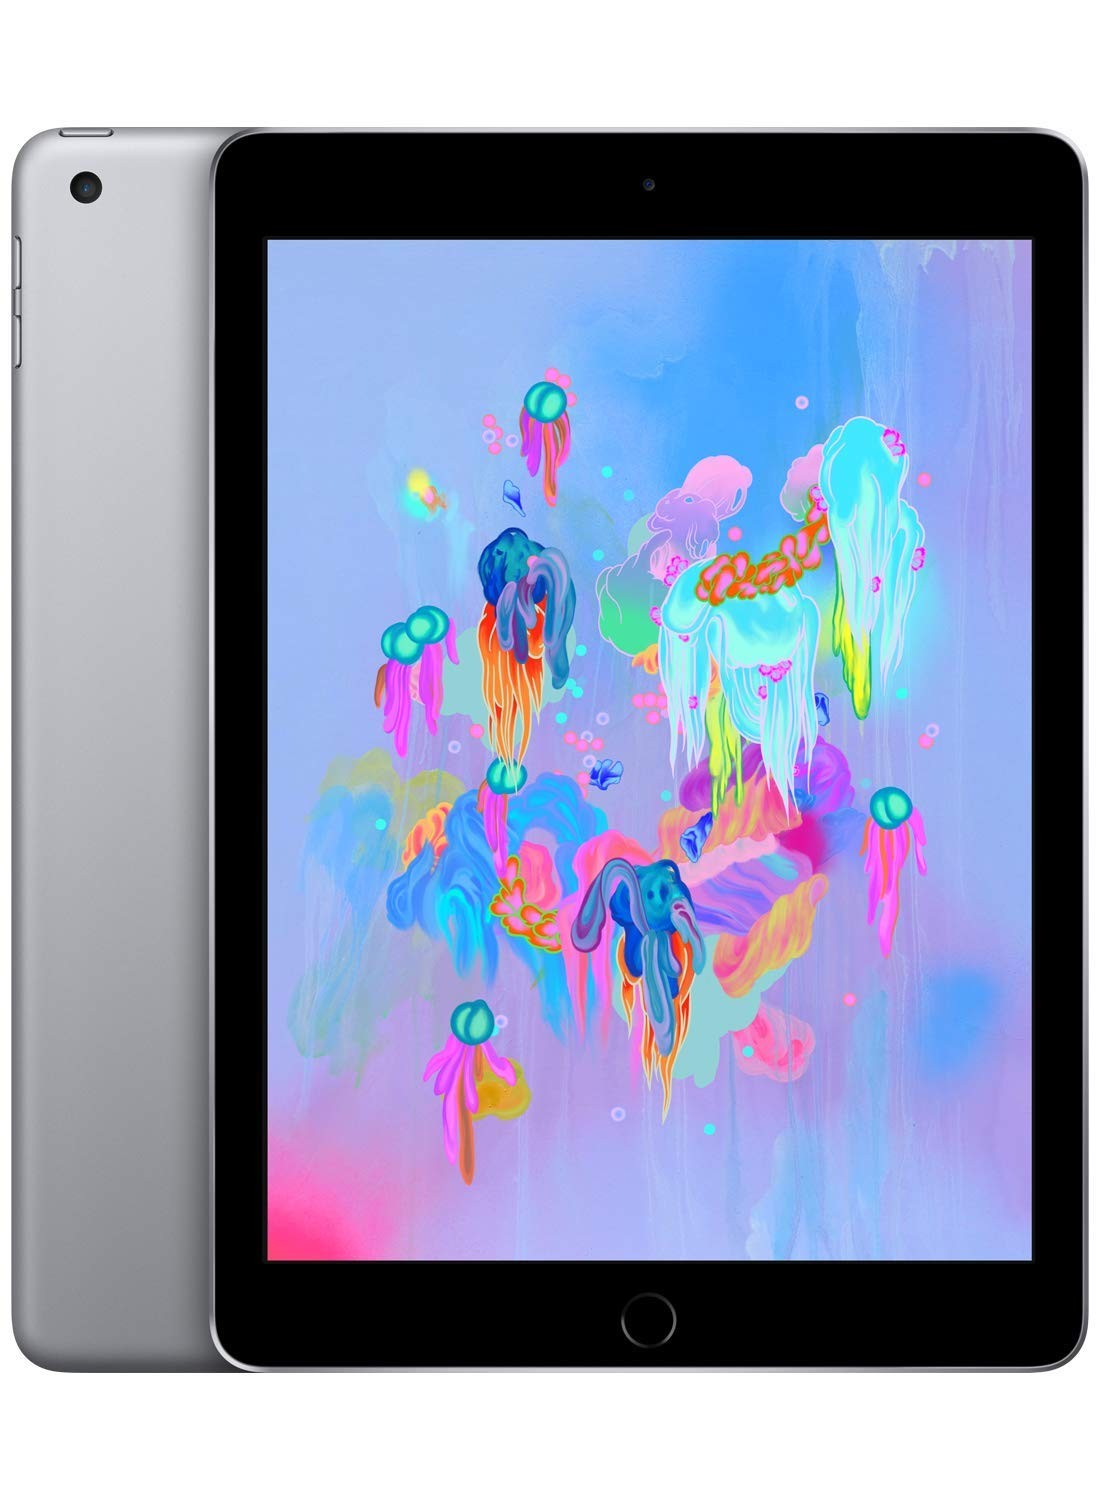 Apple iPad (Wi-Fi, 32GB) - Space Gray (Previous Model)